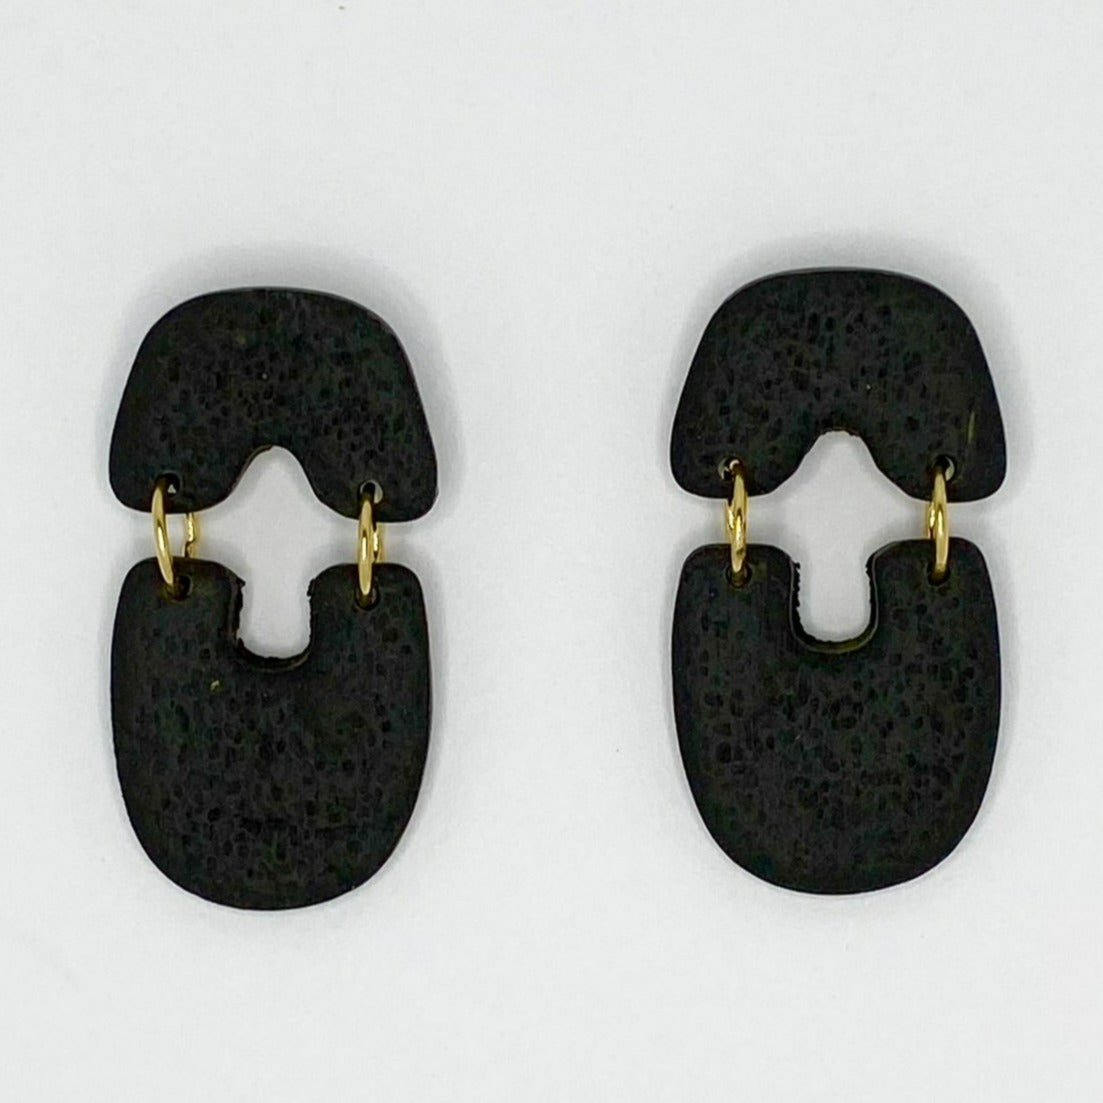  Fall Inspired dark espresso black textured polymer clay dangle earrings 0118 by Wendy Varner Designs